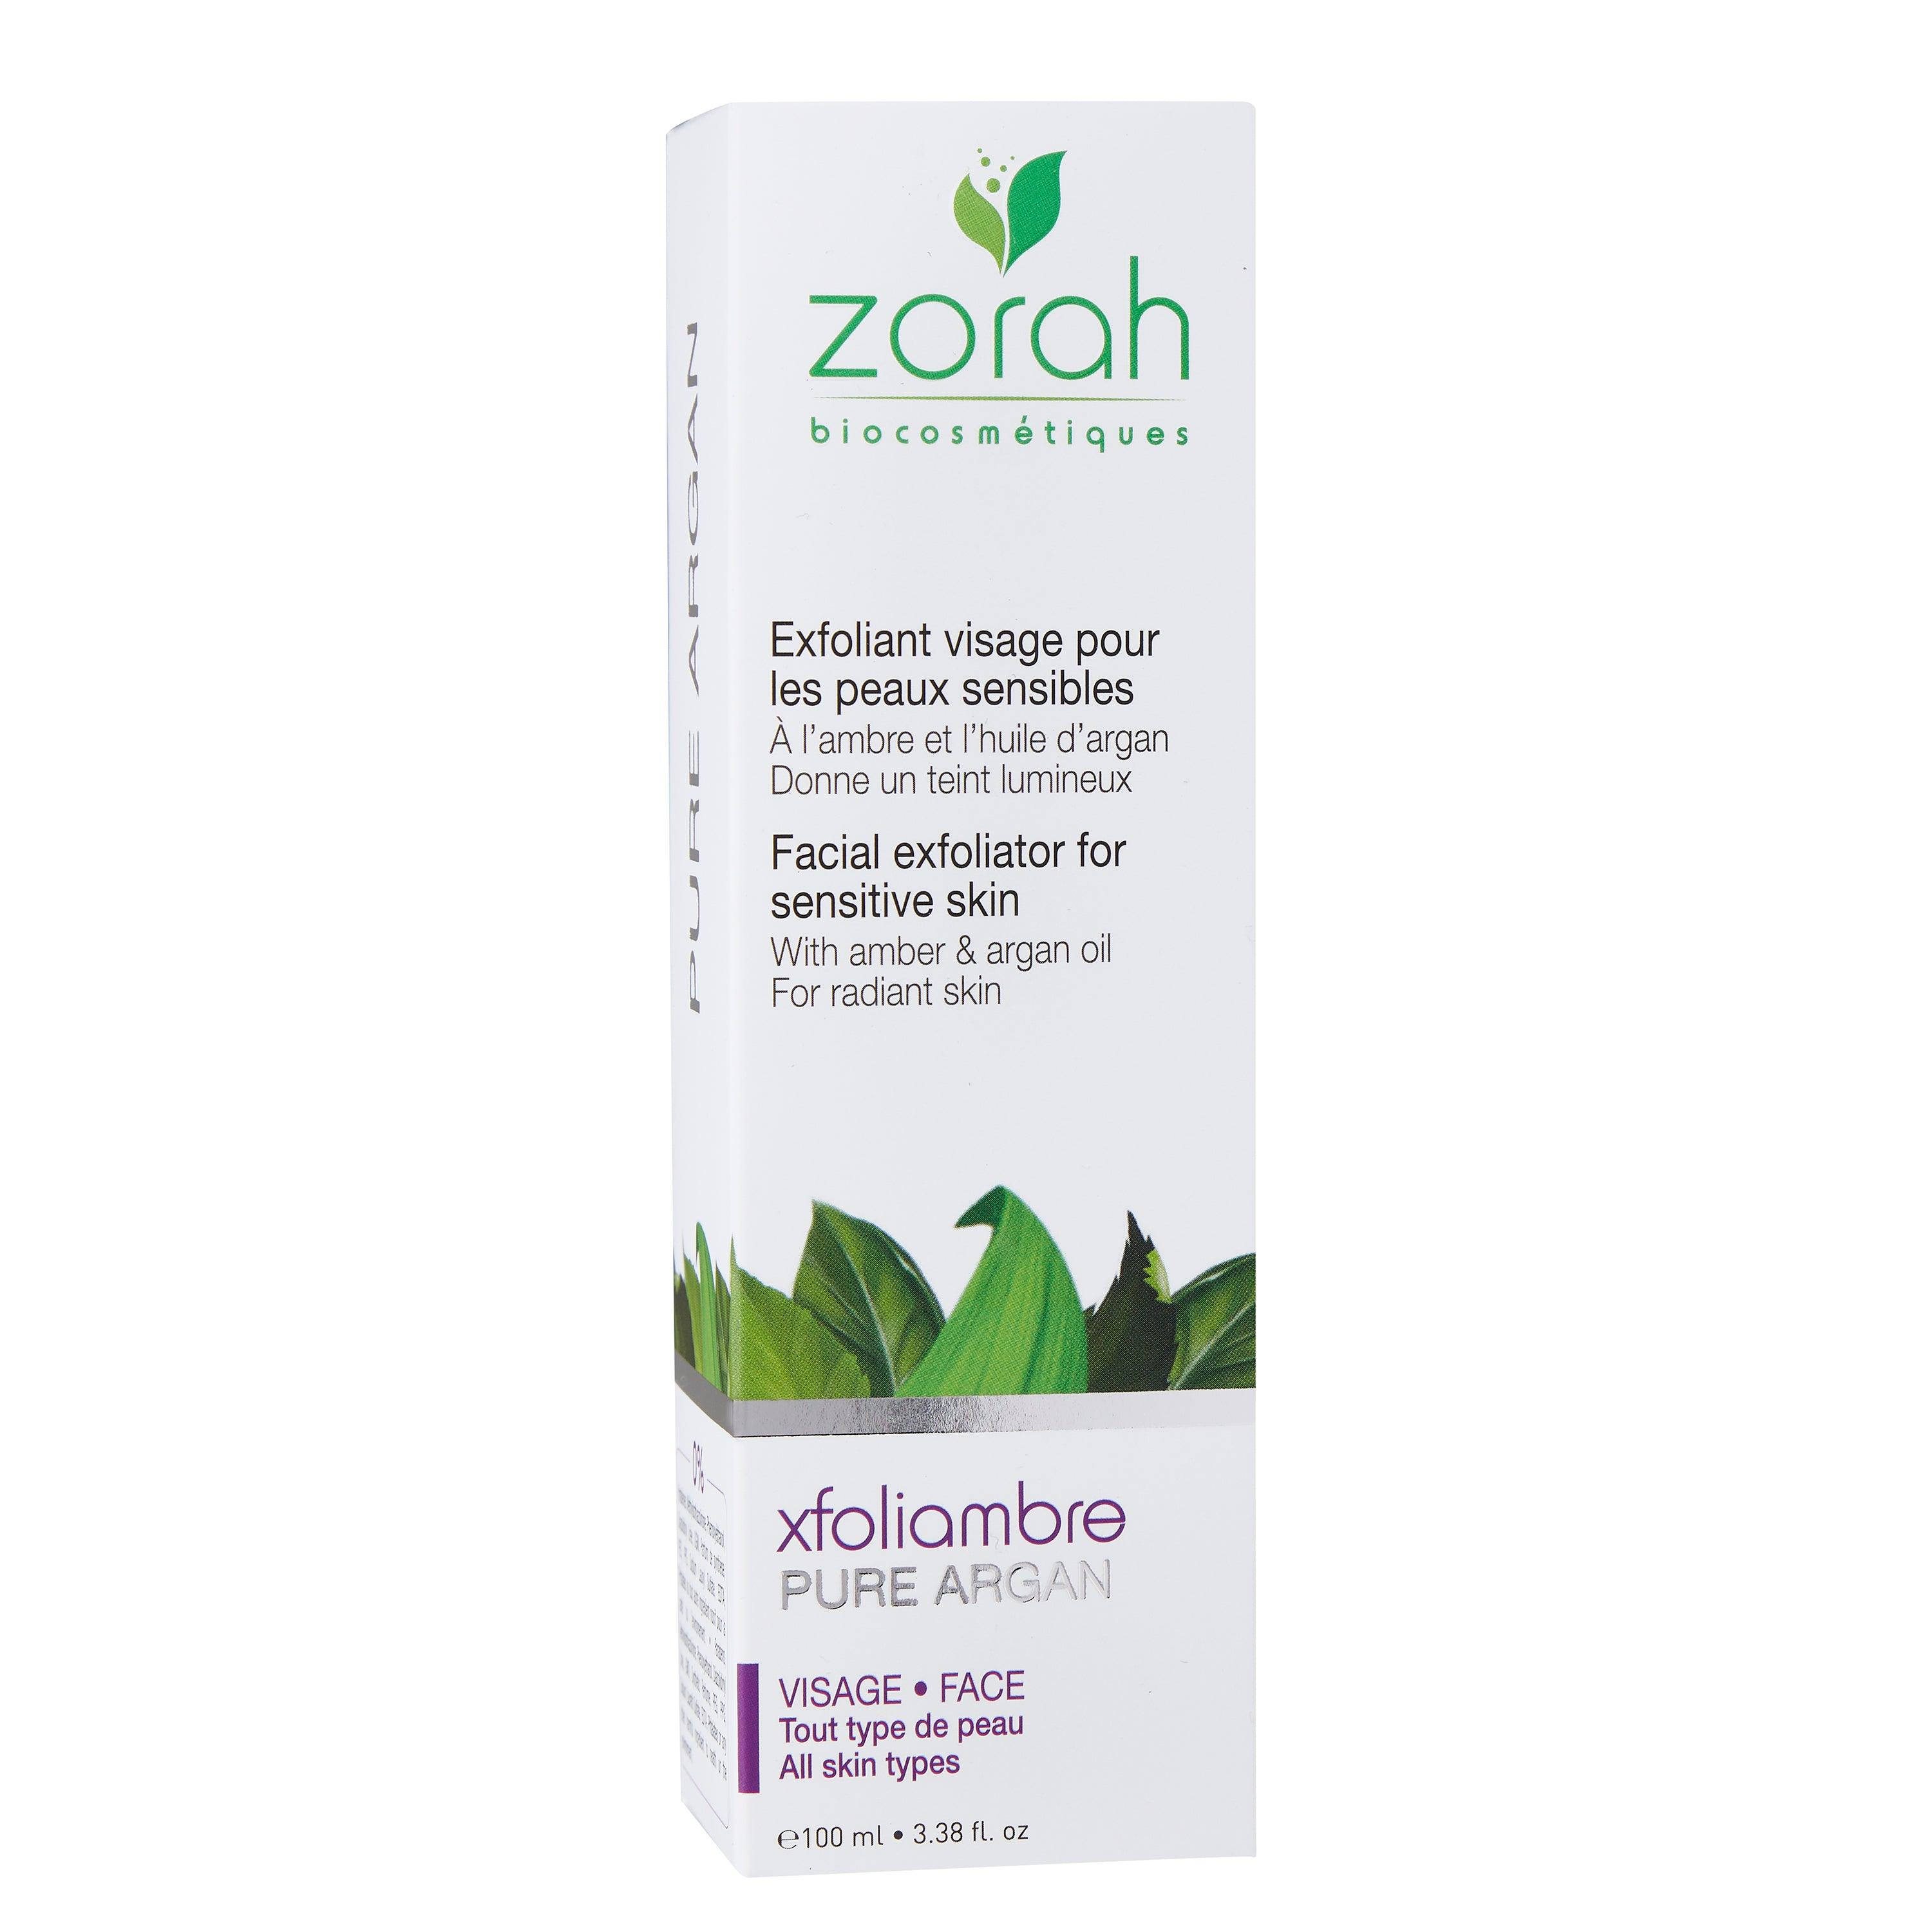 xfoliambre | facial exfoliator for sensitive skin - Zorah biocosmétiques